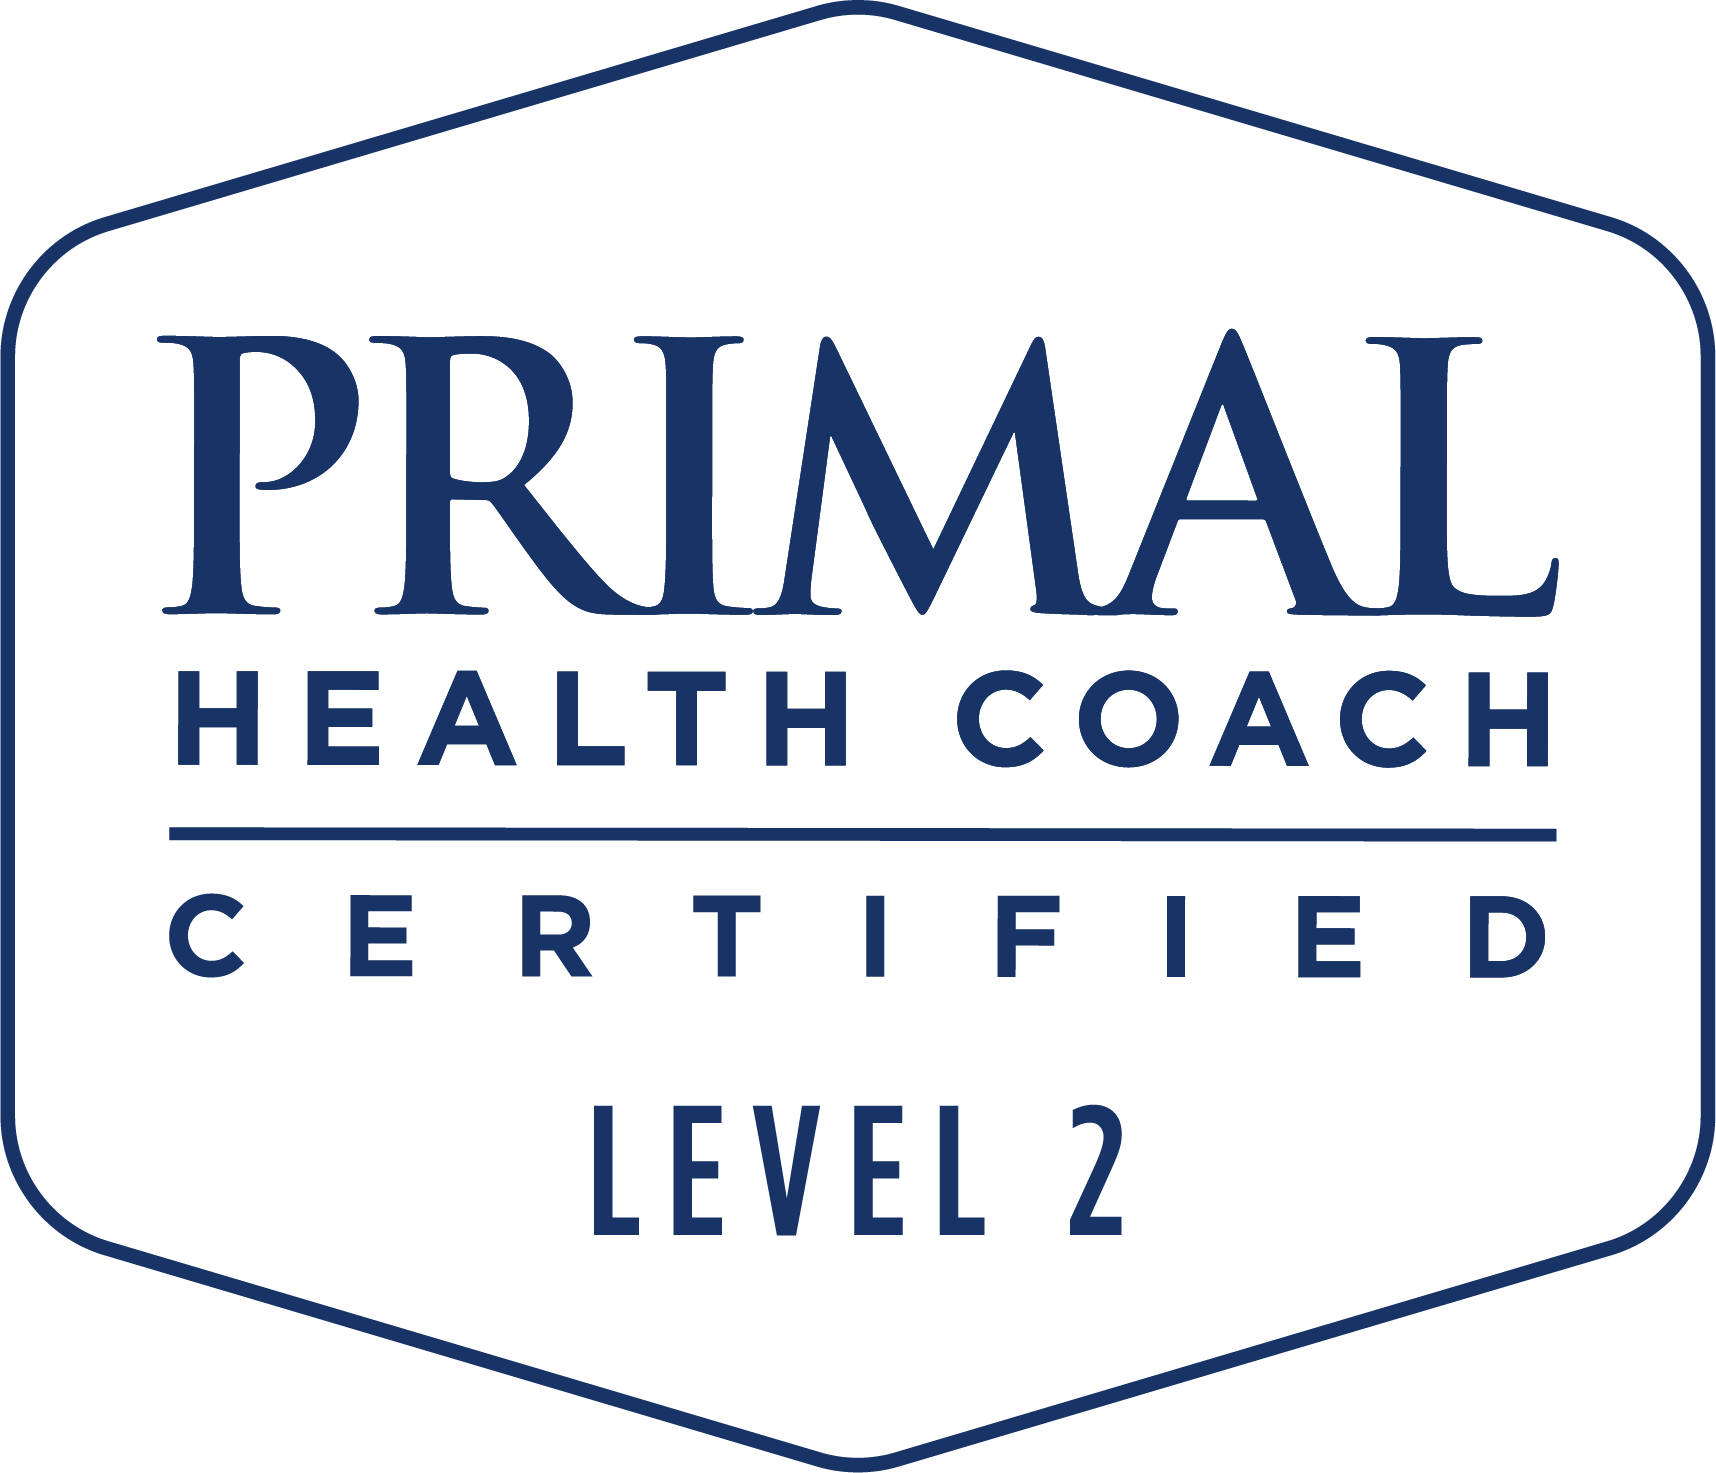 Primal Health Coach Institute